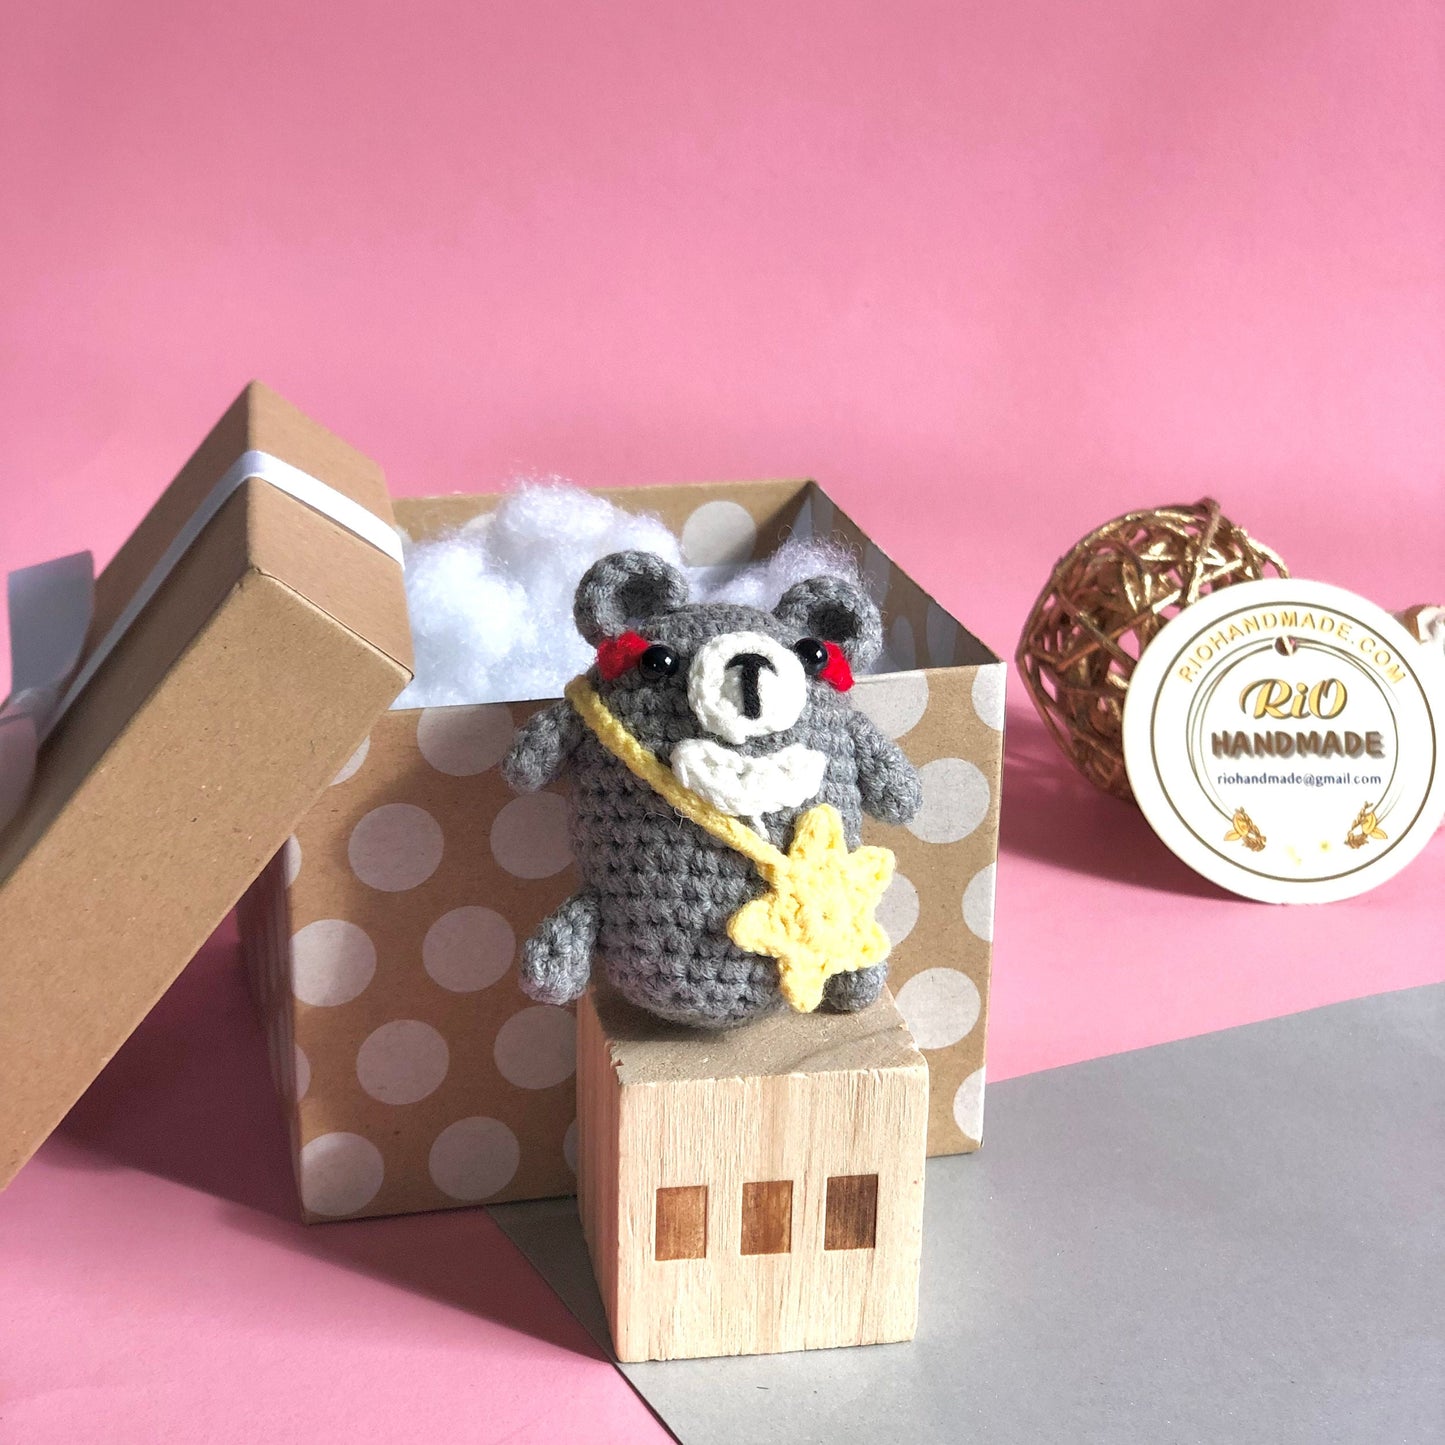 Handmade keychain, car rearview mirror charm crochet amigurumi moon bear, plushie toy, gift, car hanging accessory